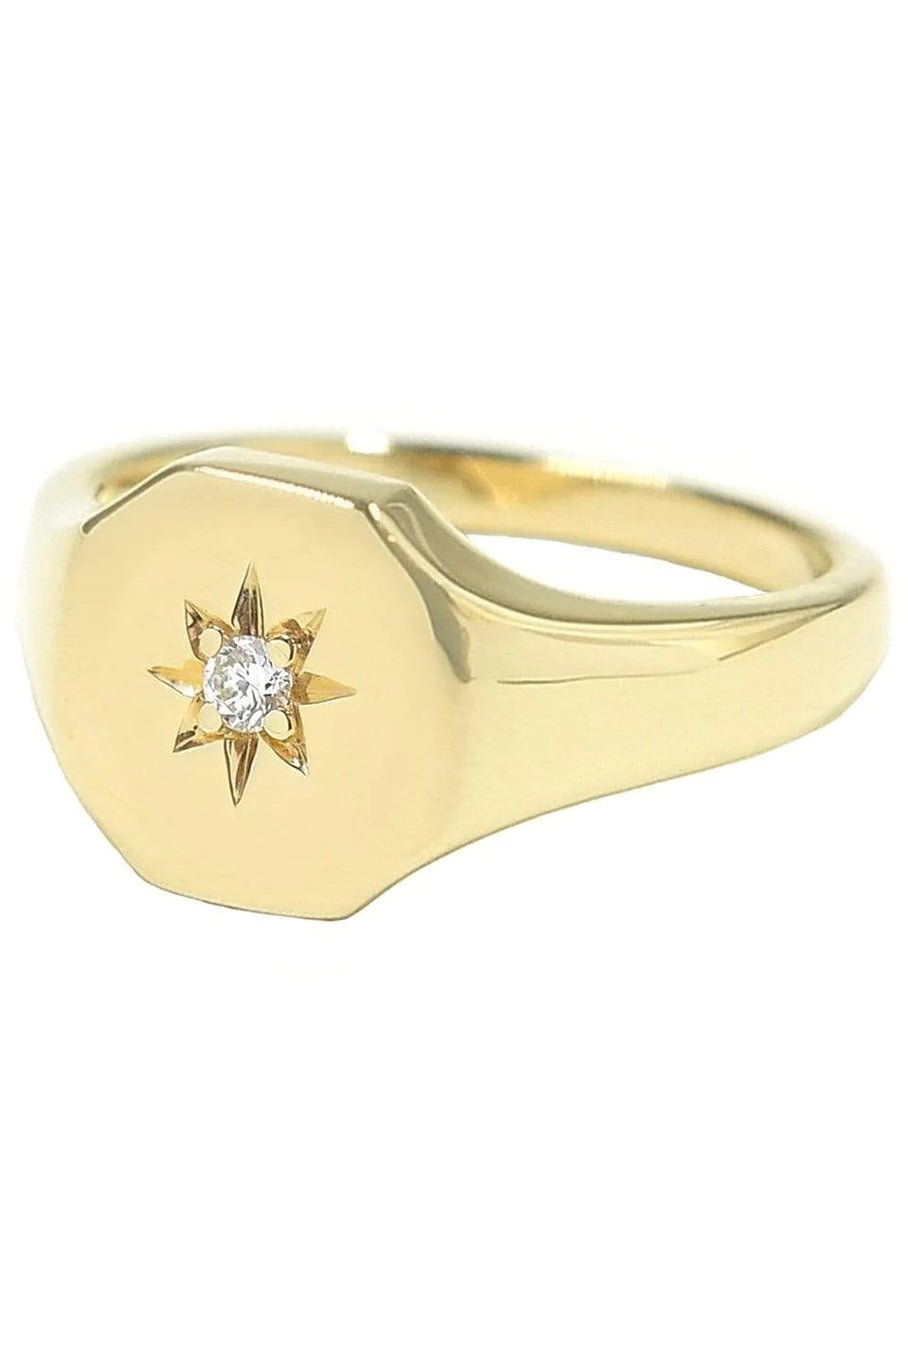 BONDEYE JEWELRY-Josie Diamond Signet Ring-YELLOW GOLD